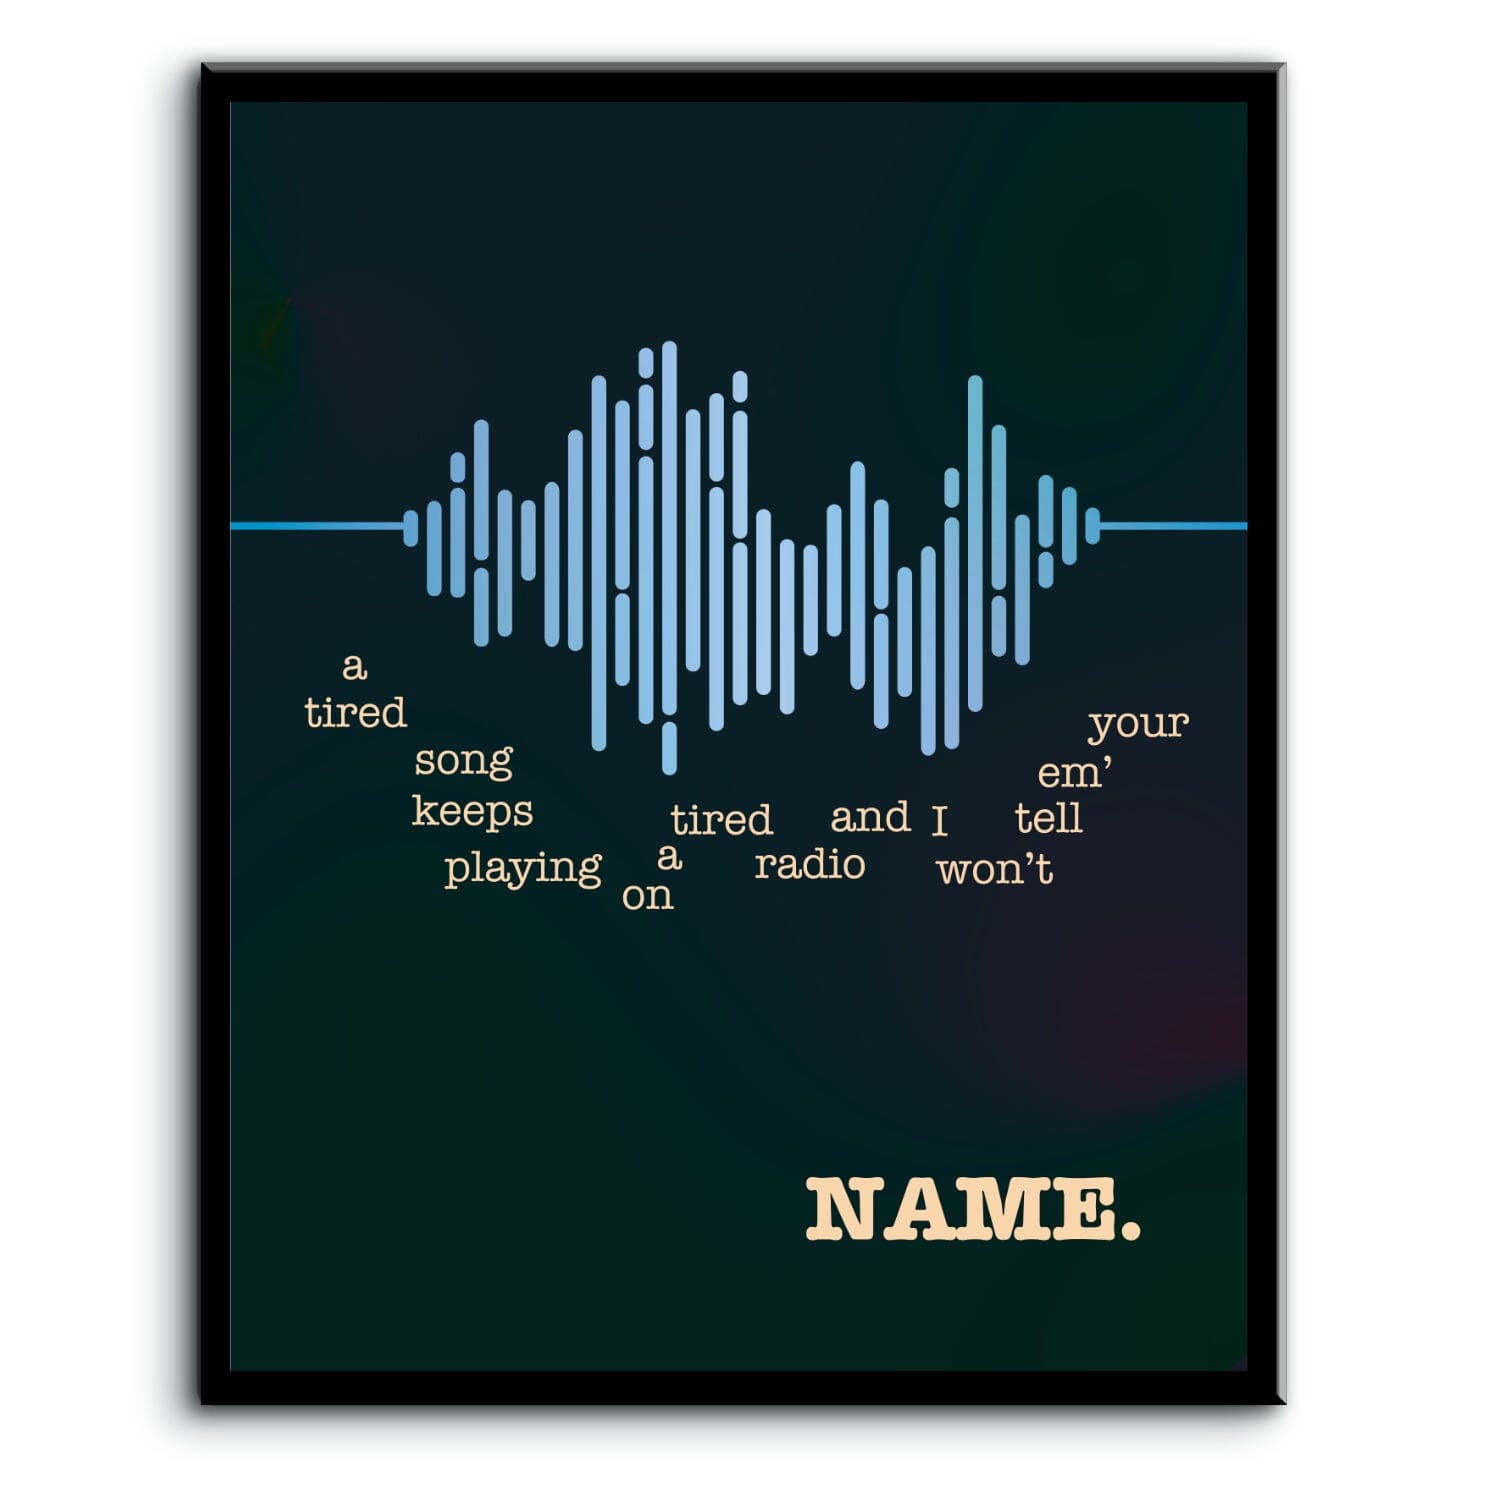 Name by Goo Goo Dolls - Pop Music Song Lyrics Art Poster Song Lyrics Art Song Lyrics Art 8x10 Framed Print (without mat) 